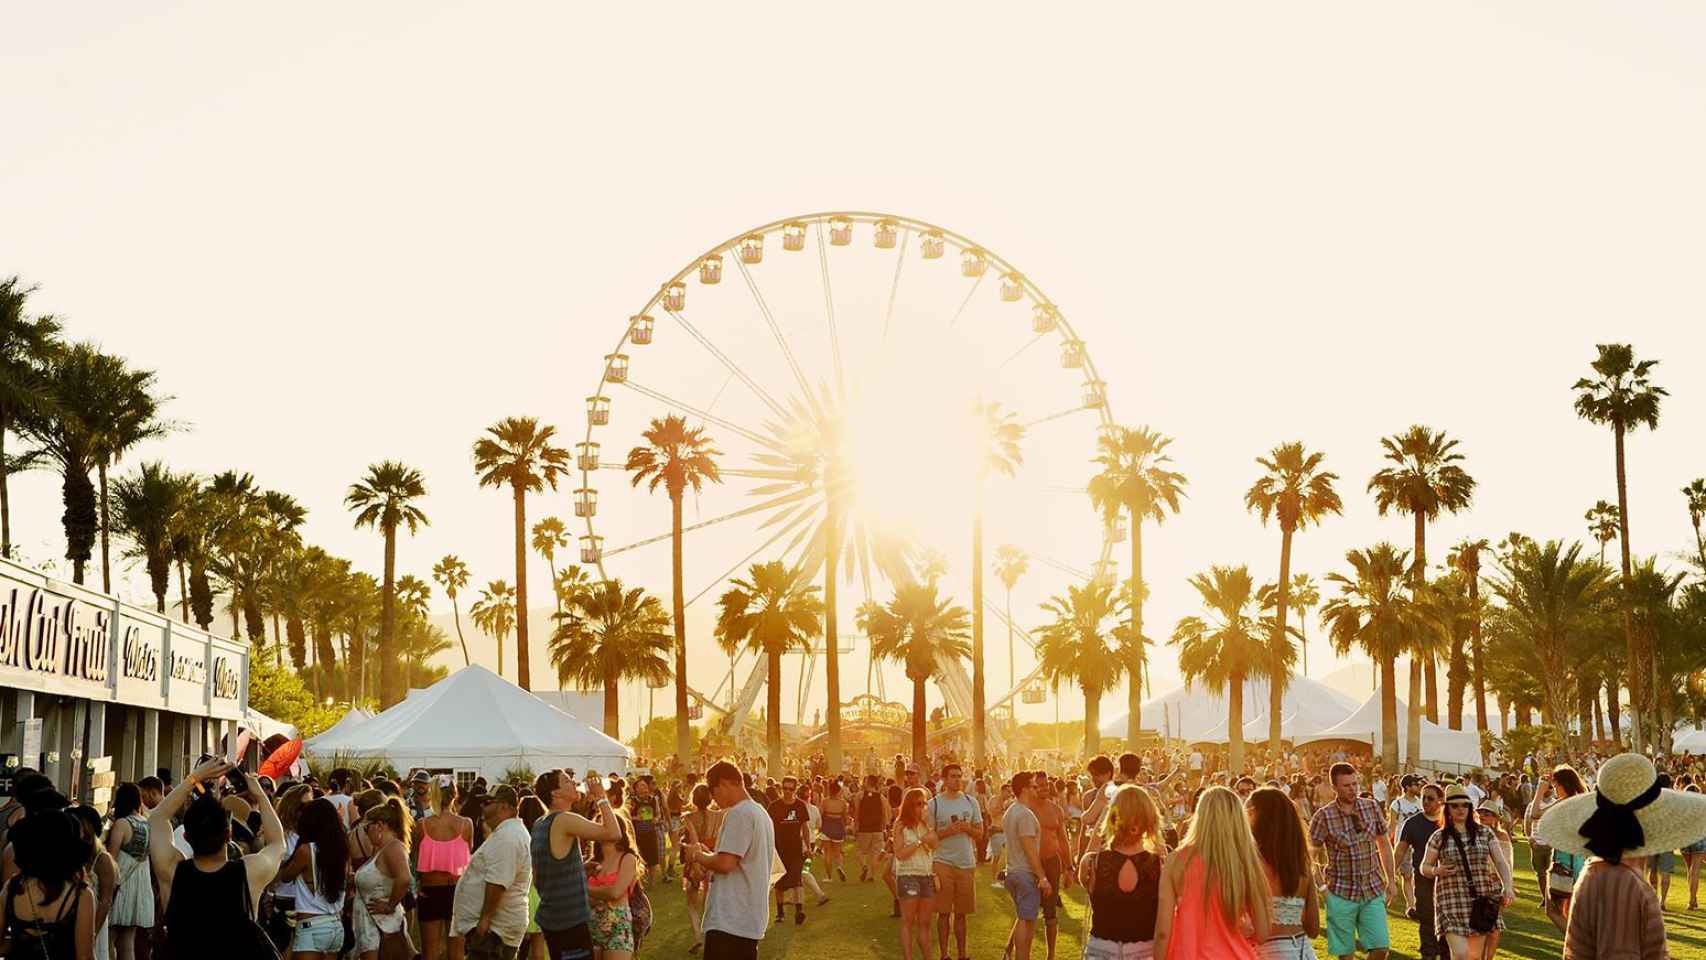 Festival de música Coachella / COACHELLA